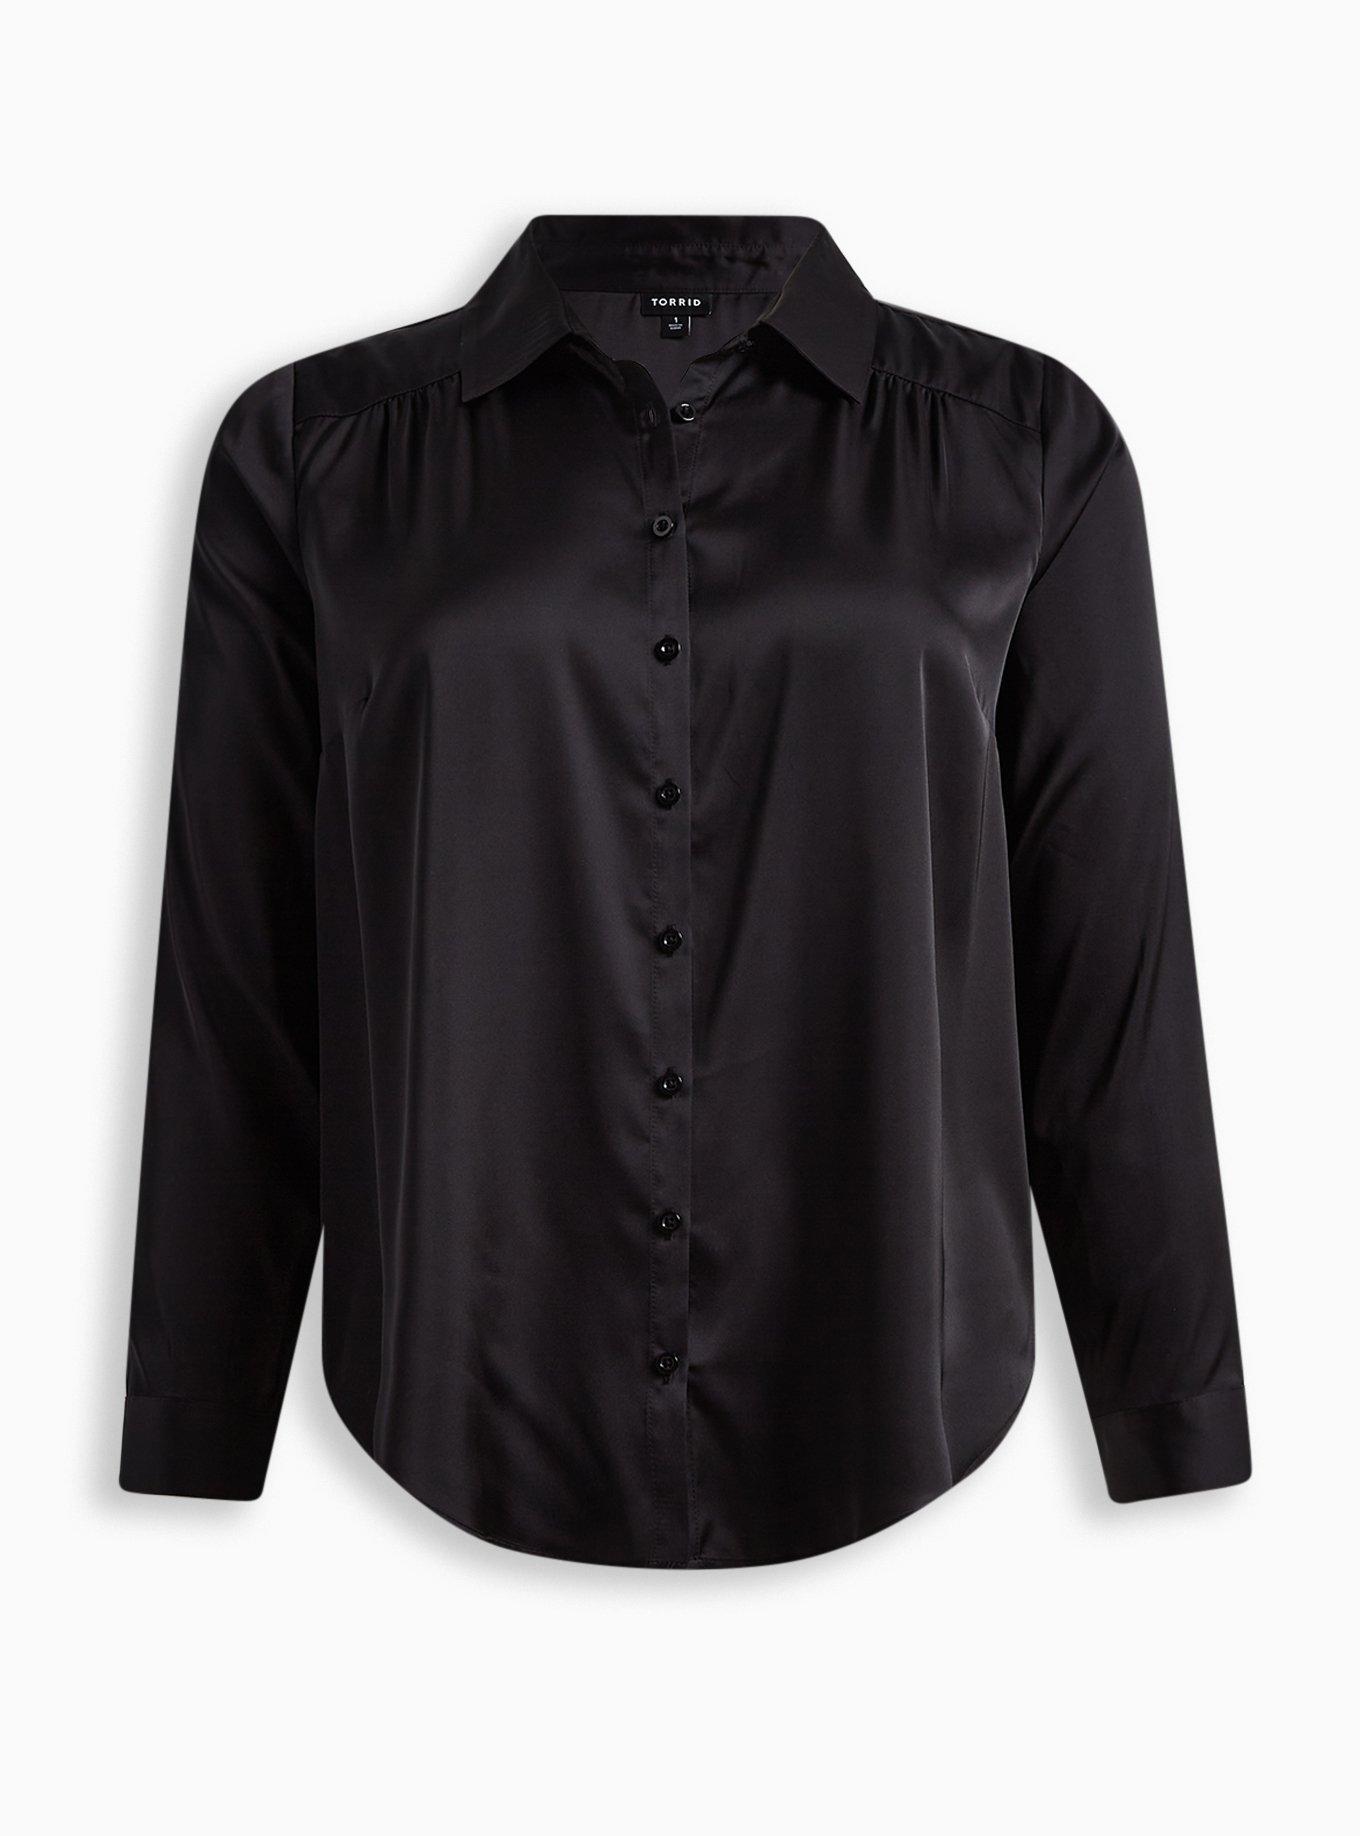 Plus Size - Madison Satin Jacquard Tie Front Shirt - Torrid